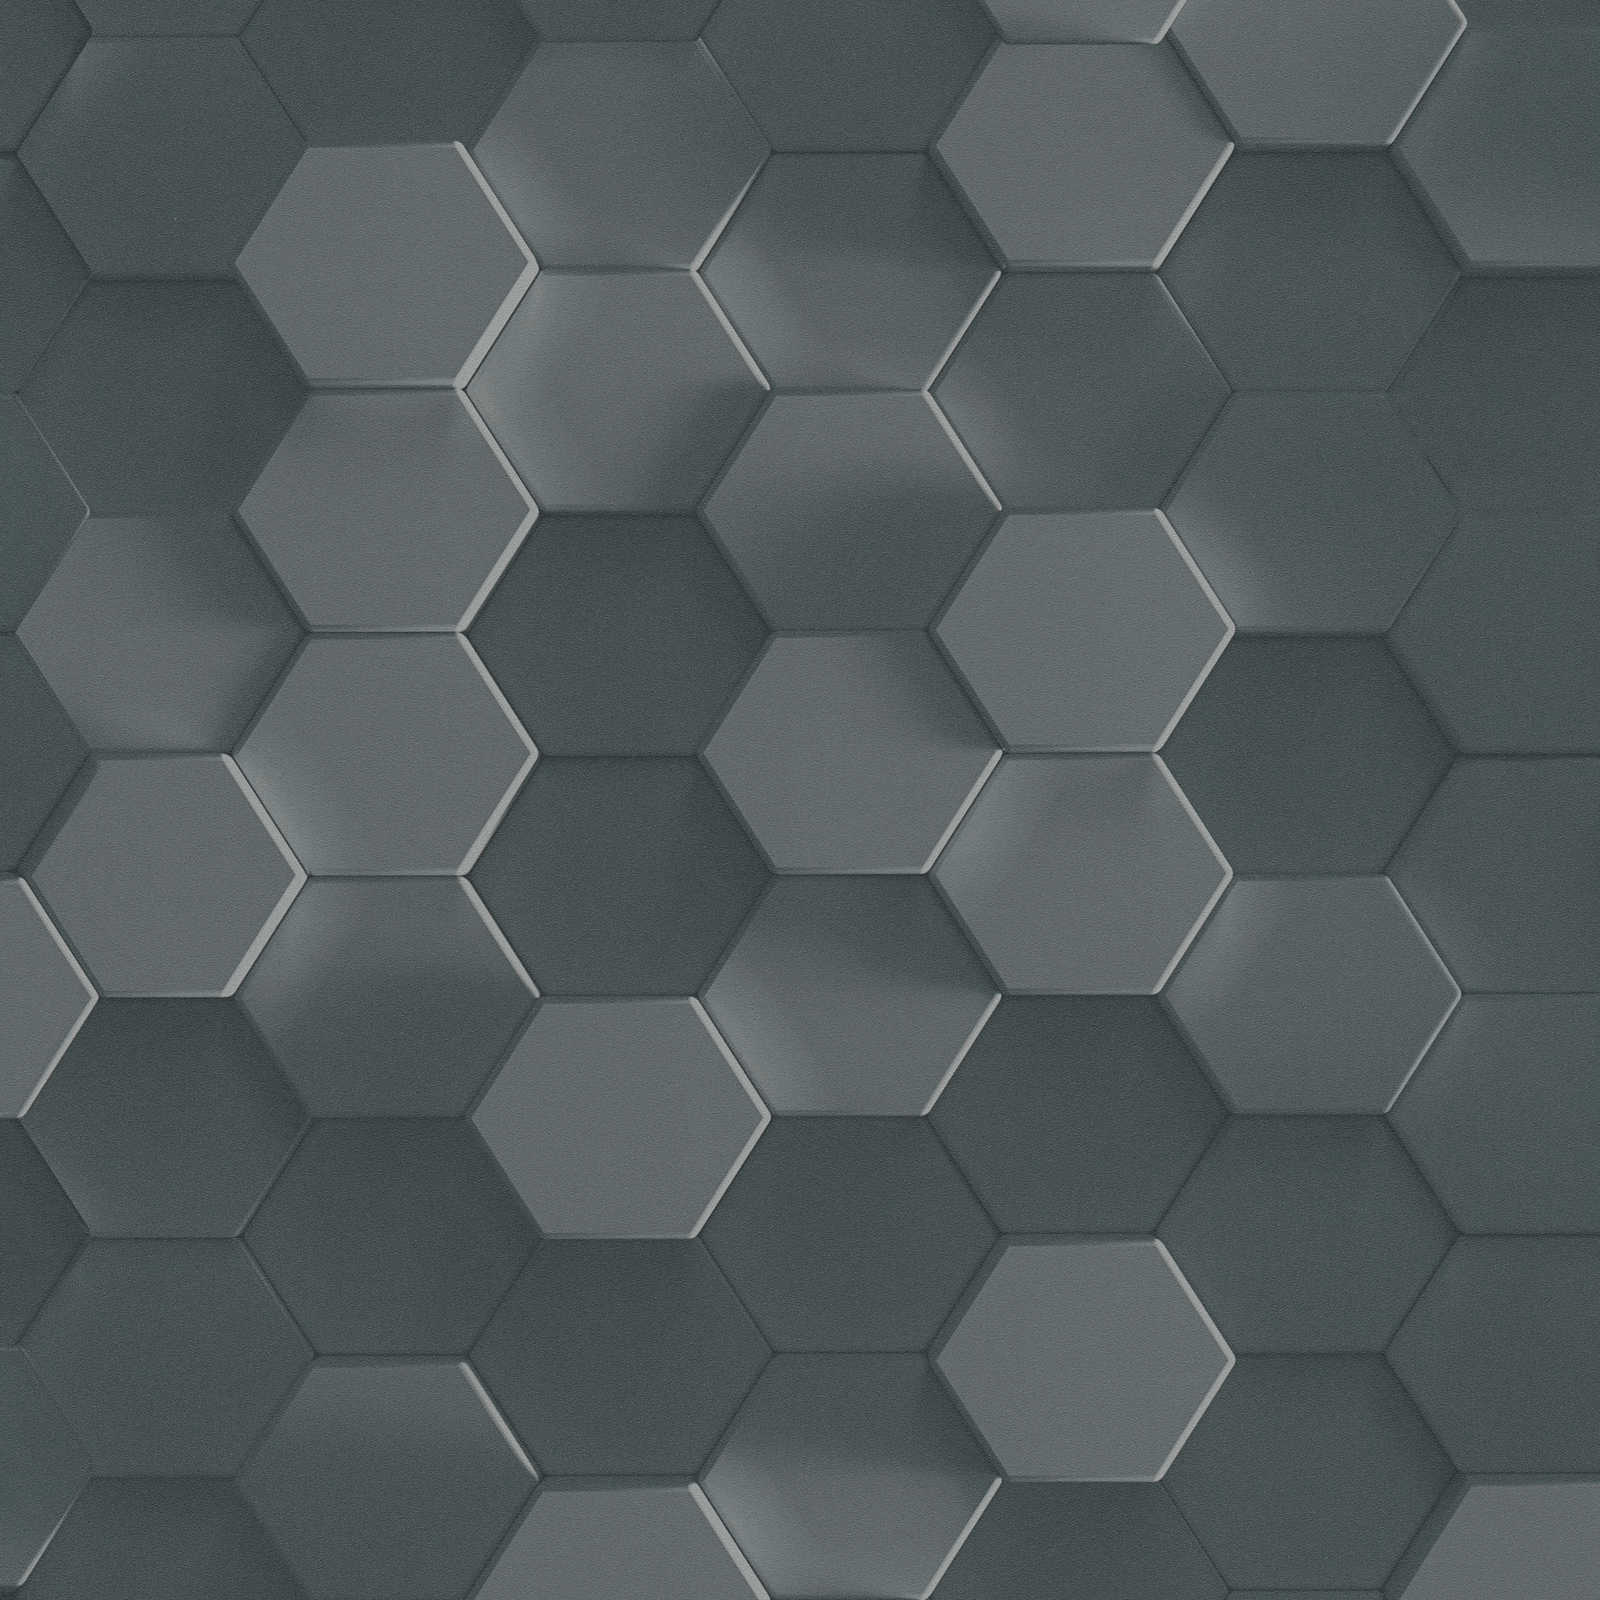         Hexagon 3D wallpaper graphic pattern honeycomb - grey, black
    